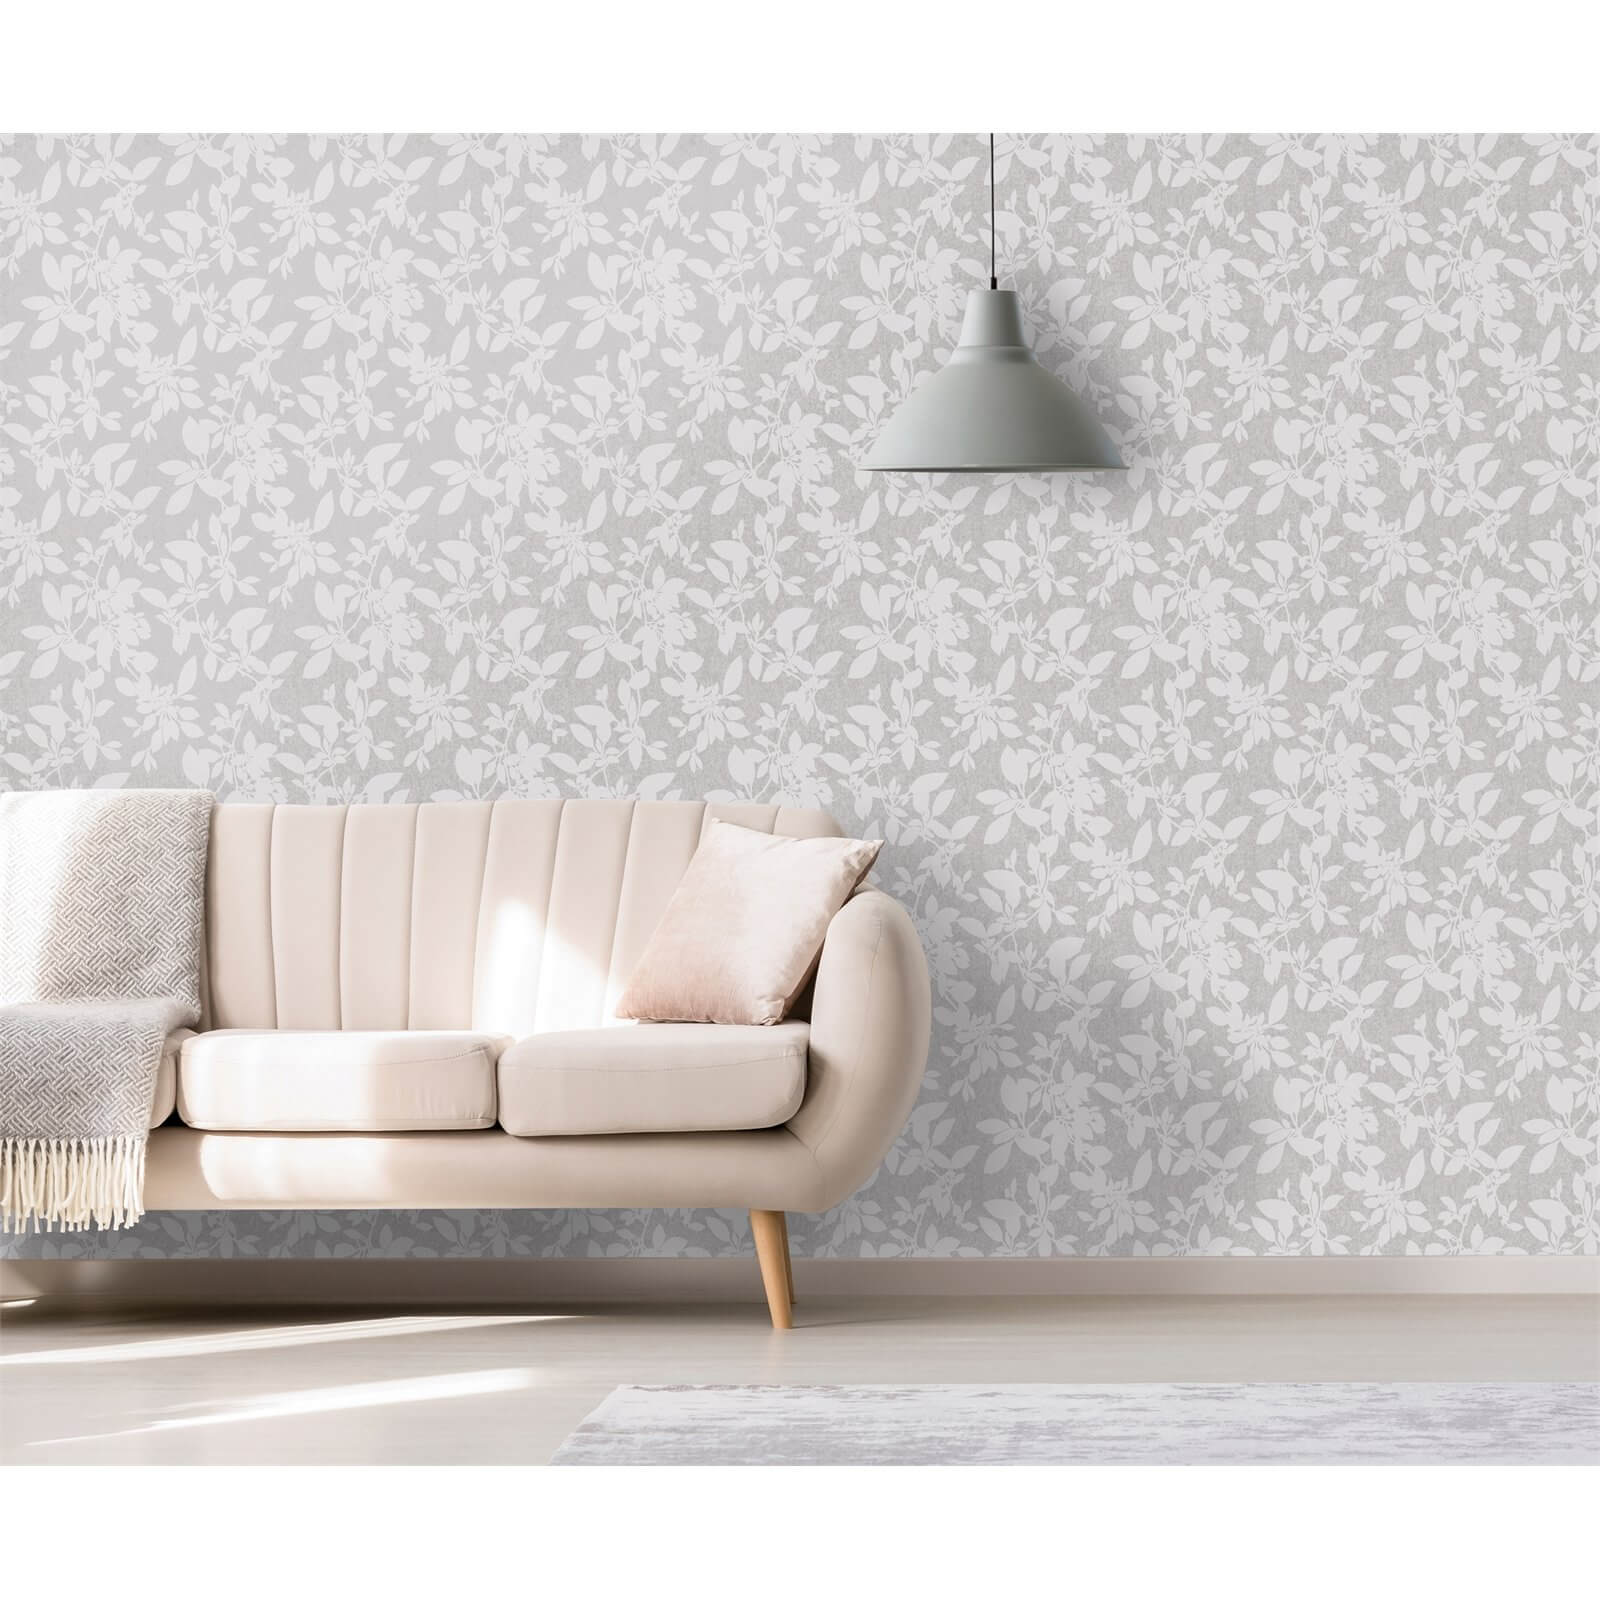 Holden Decor Linden Floral Textured Metallic Glitter Grey Wallpaper